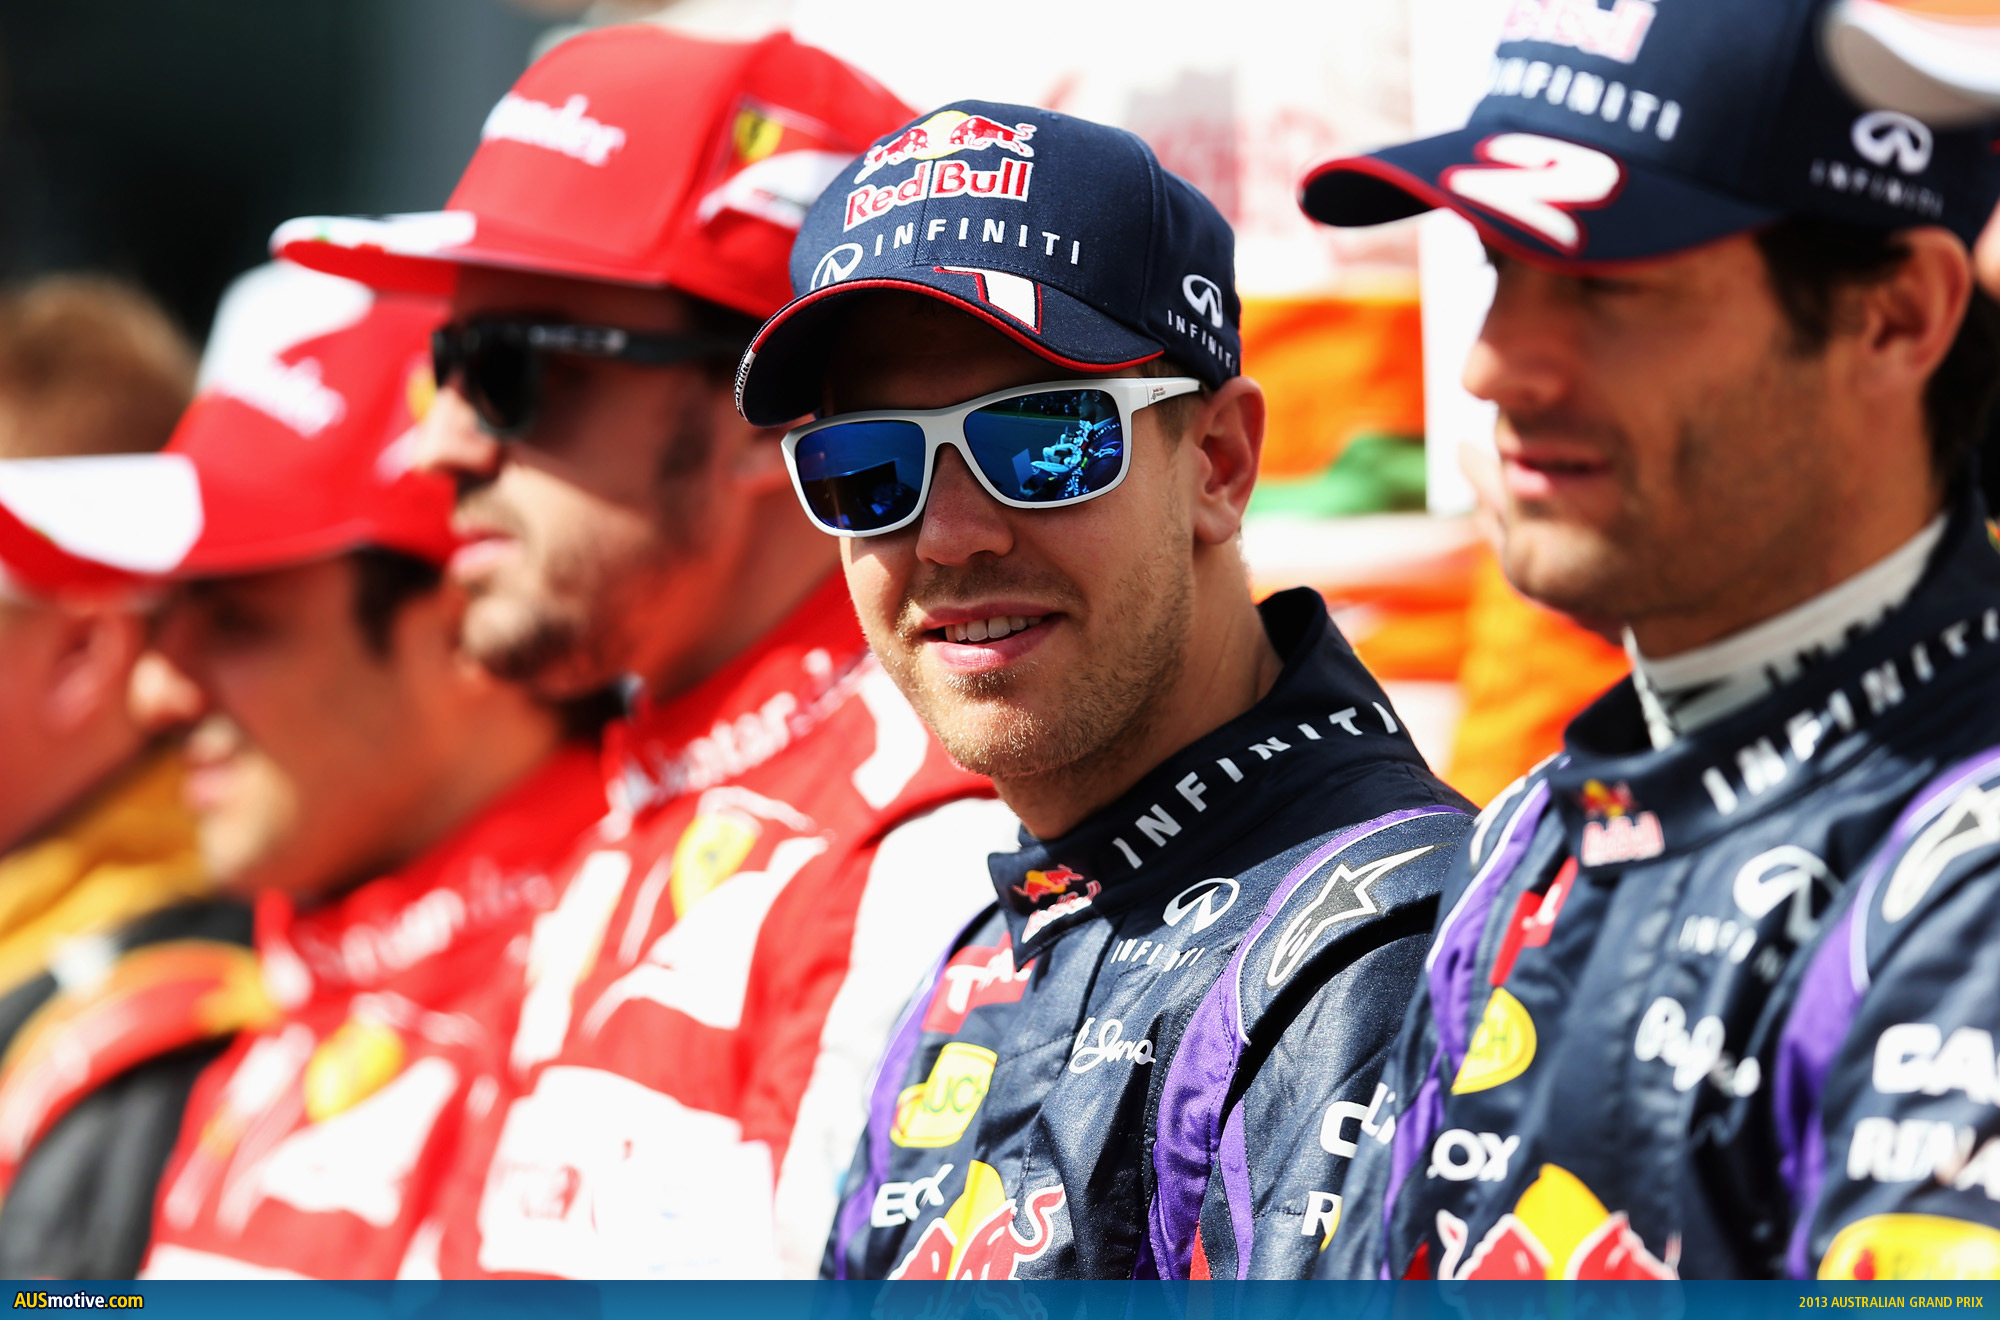 2013 Australian Grand Prix in pictures – AUSmotive.com